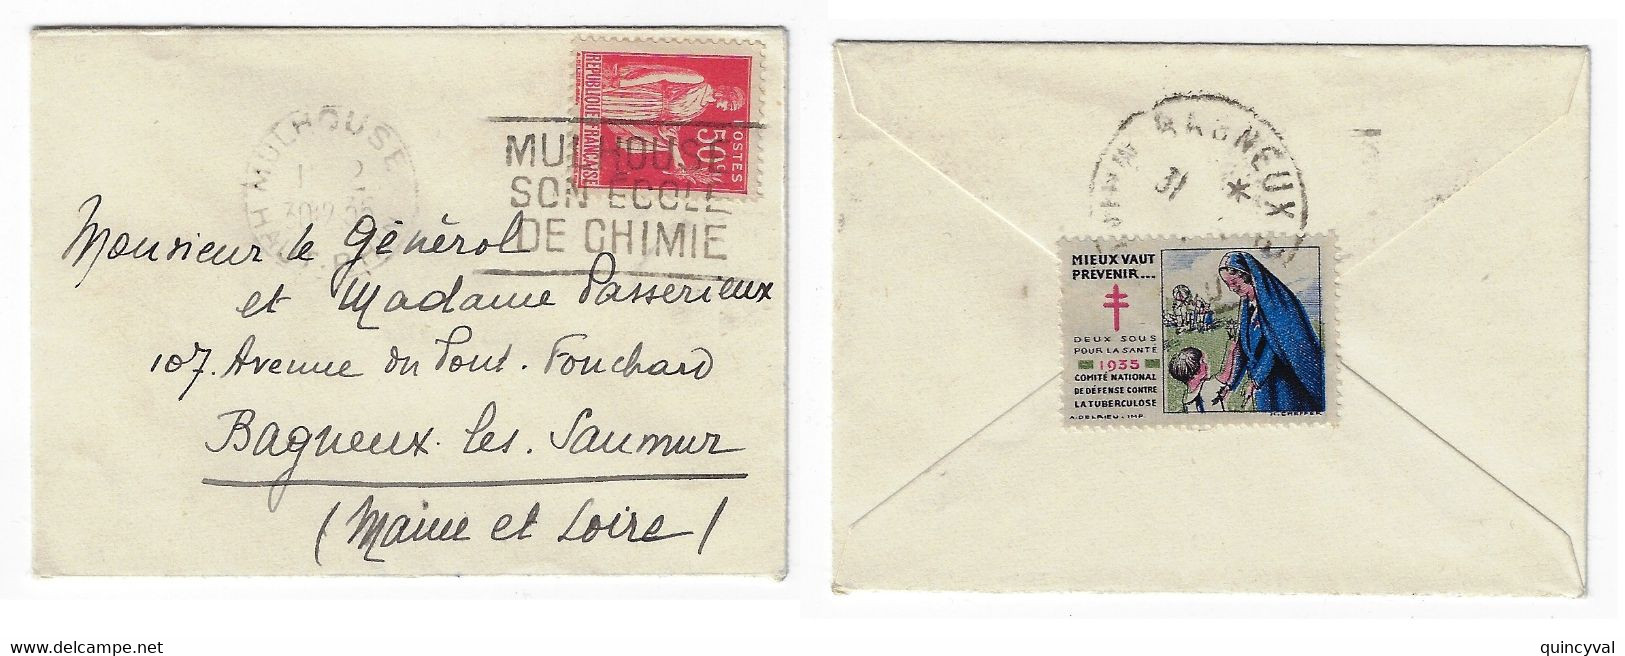 MULHOUSE Haut Rhin Carte Visite Mignonnette 50c Paix Yv 283 Ob 1935 Flamme Ecole Chime Yv 199 Verso Etiquett Tuberculose - Mechanical Postmarks (Other)